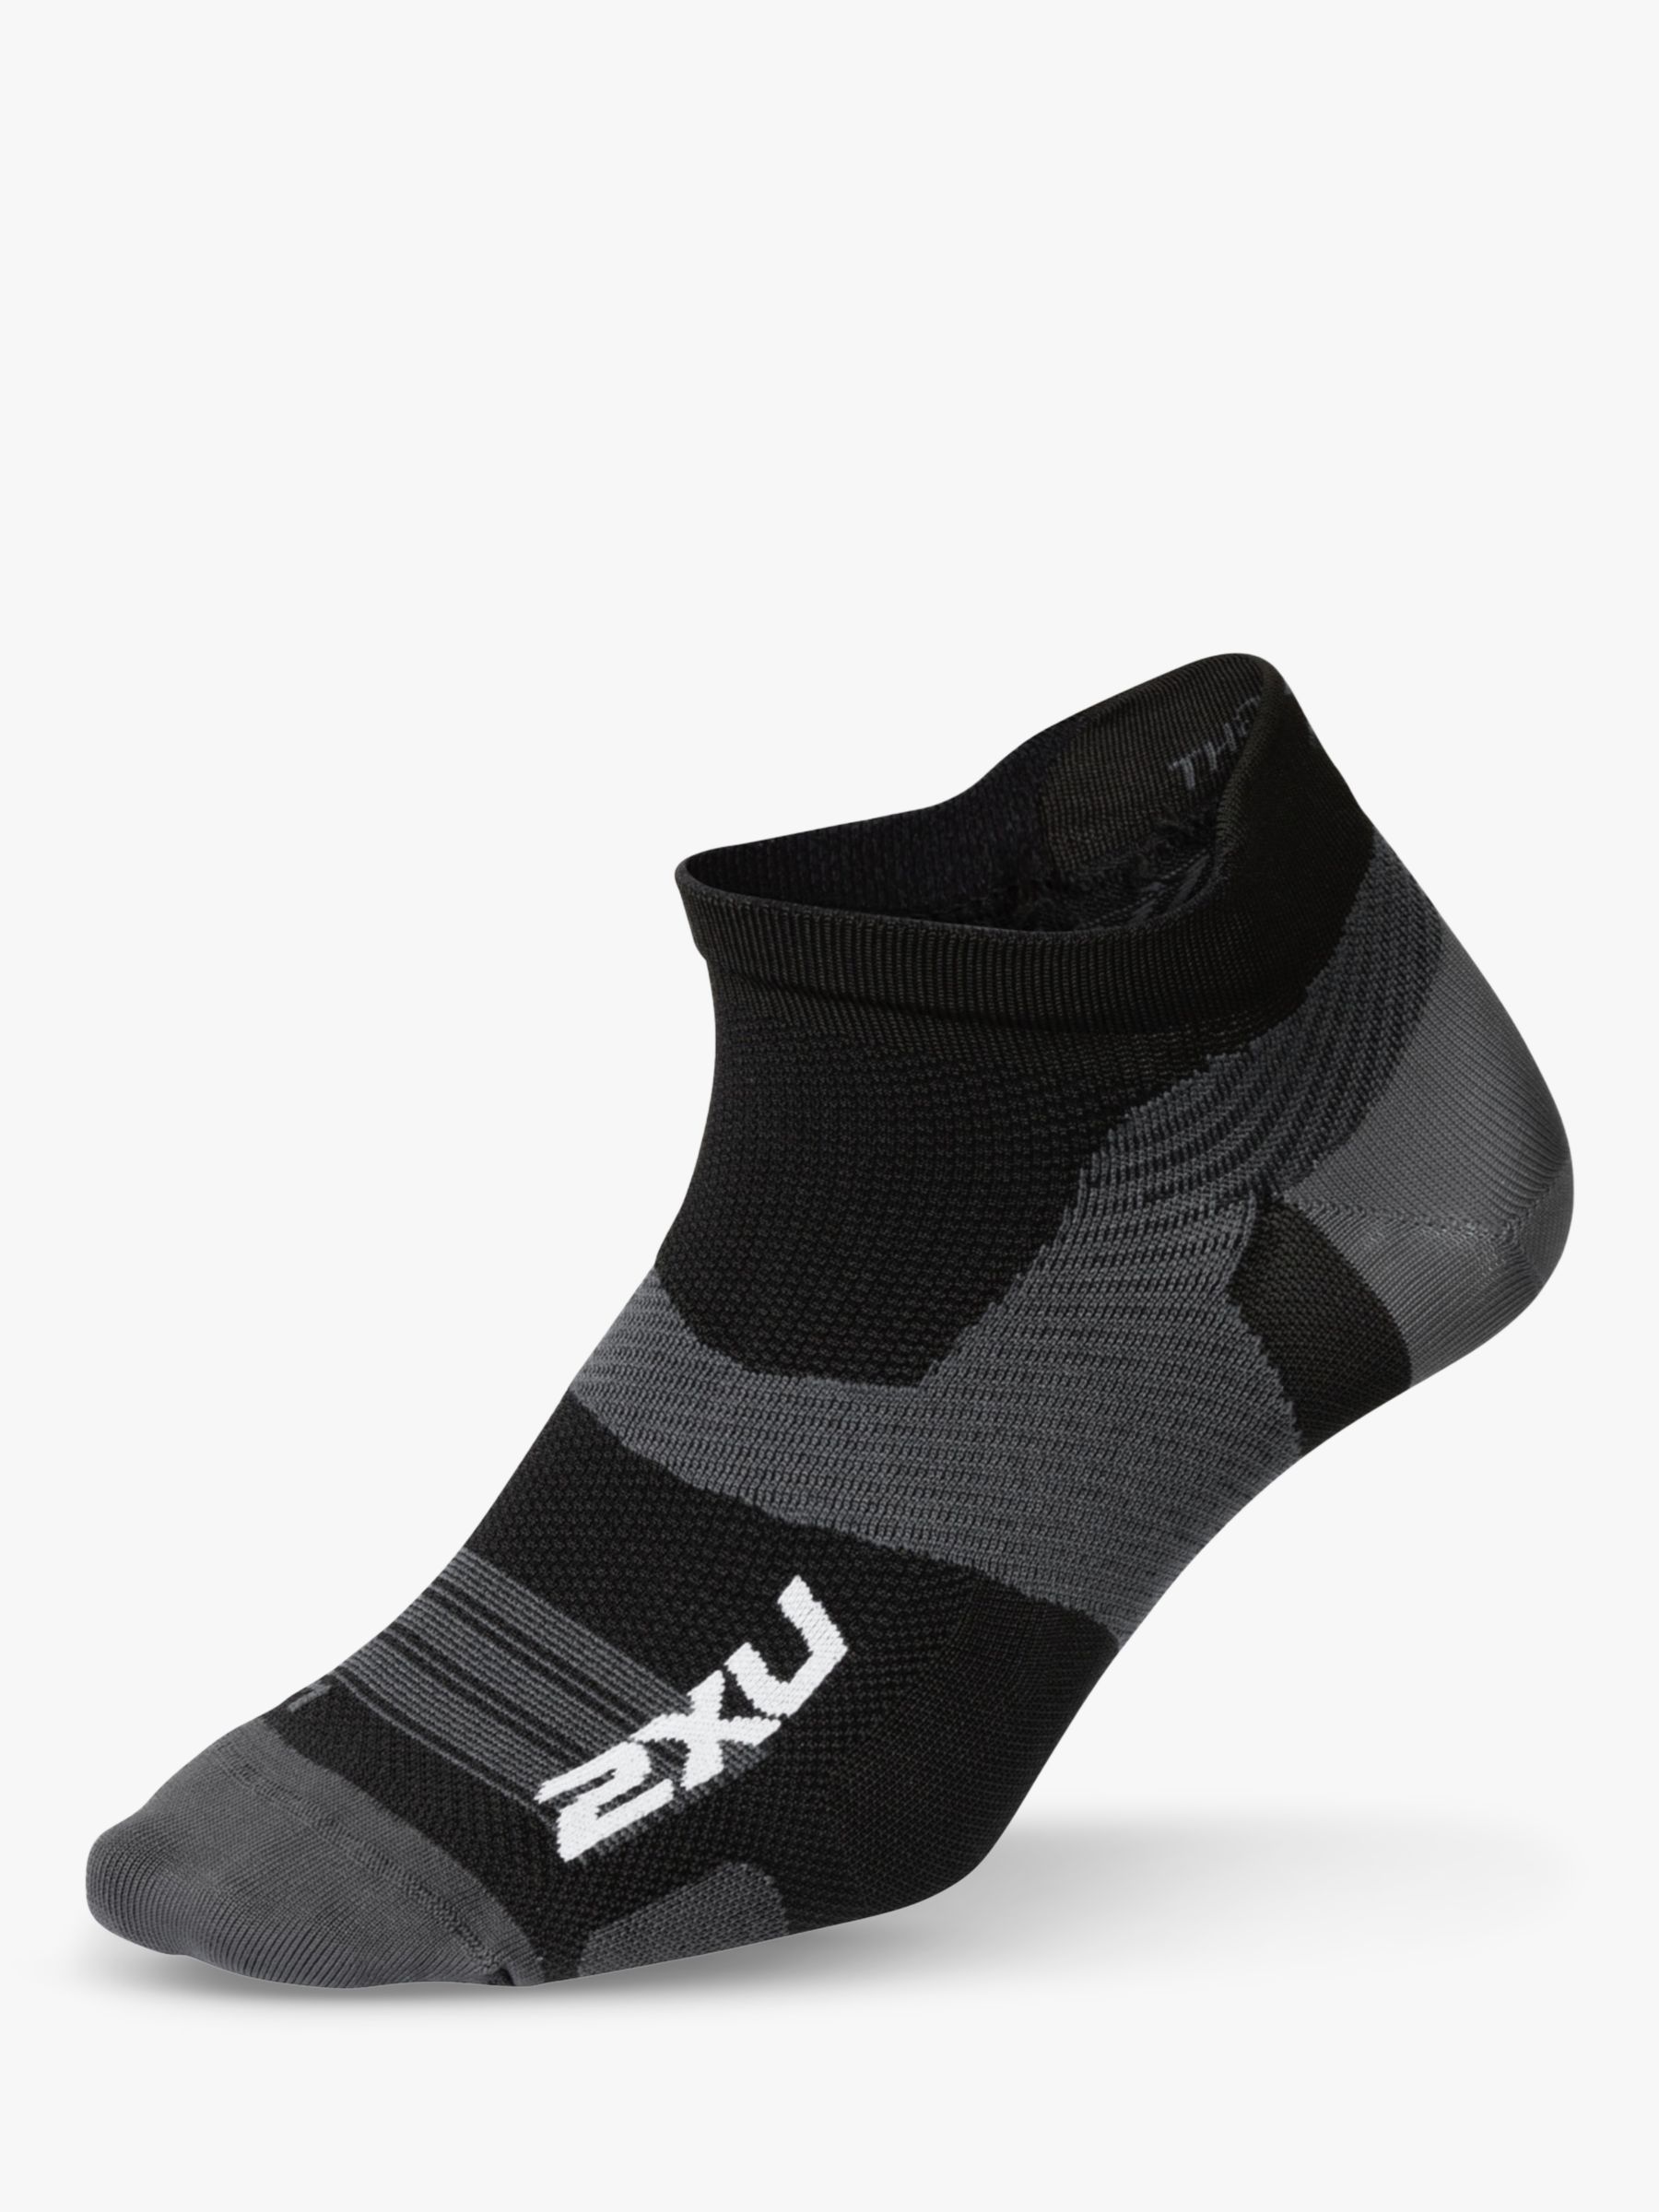 2XU Vectr Compression Socks, Black, M